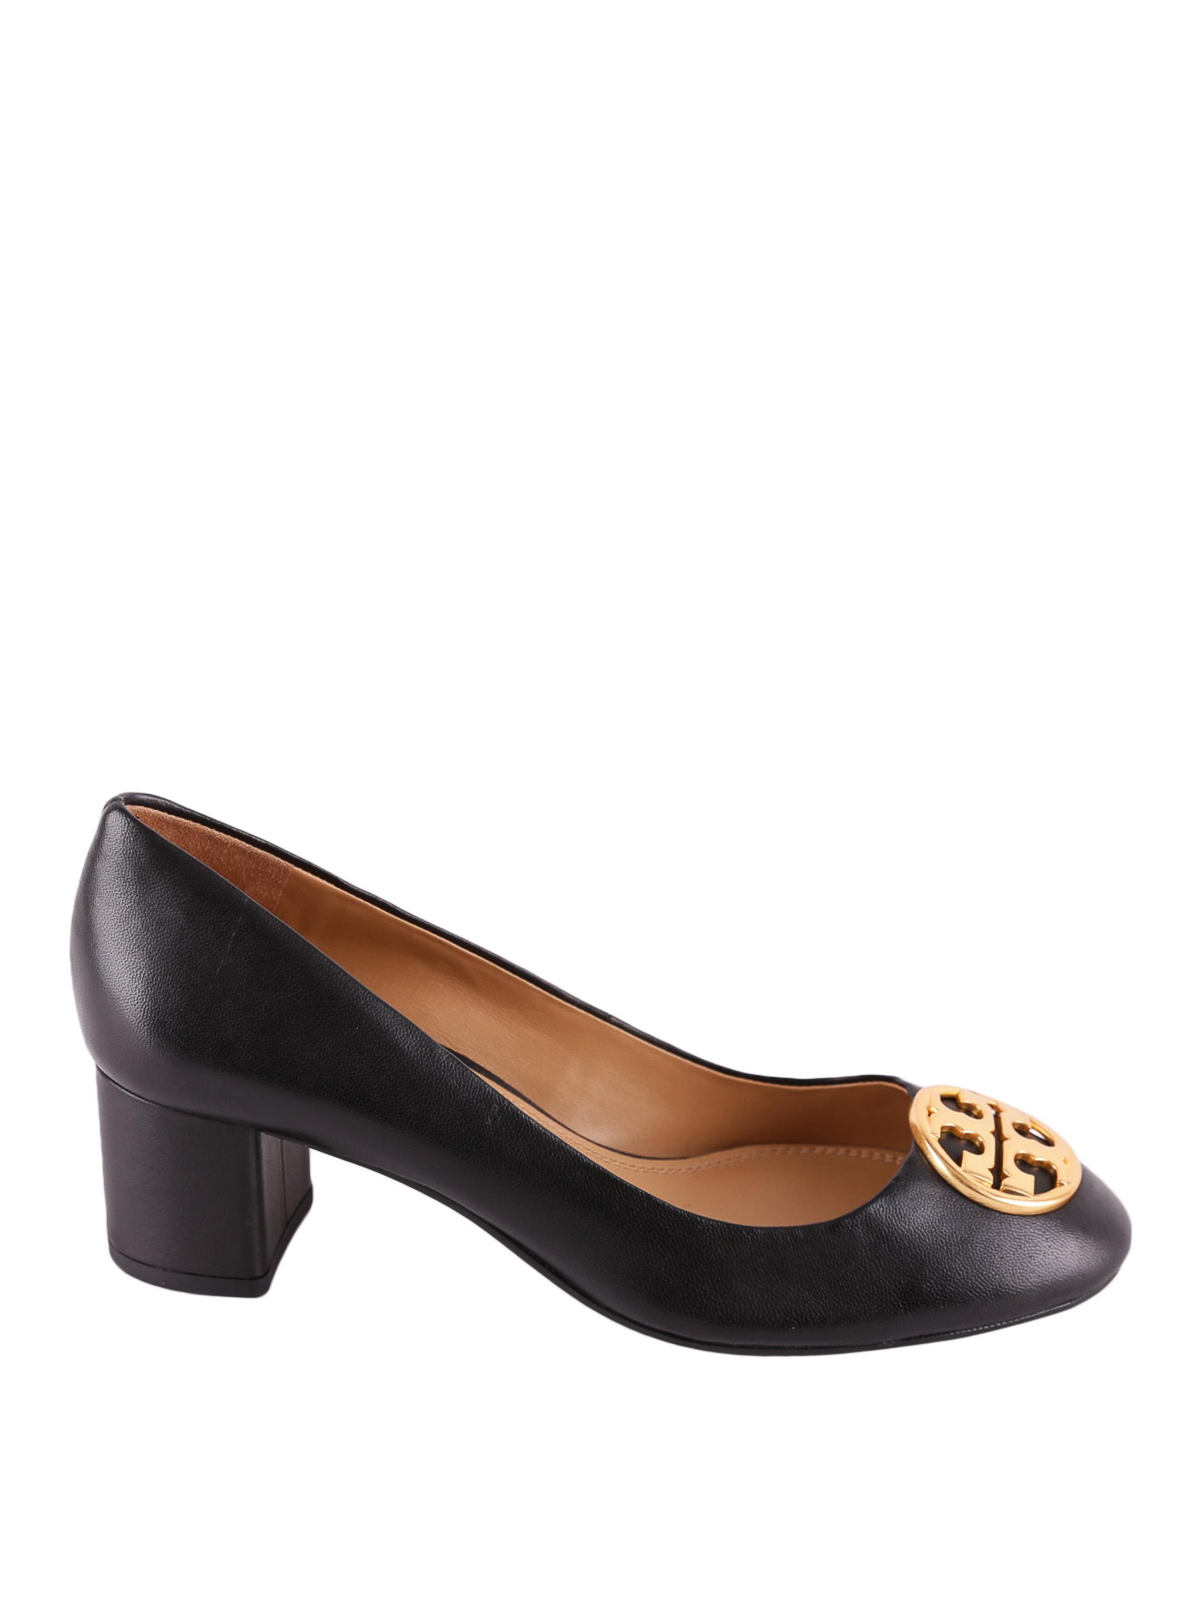 Court shoes Tory - Chelsea black nappa pumps -